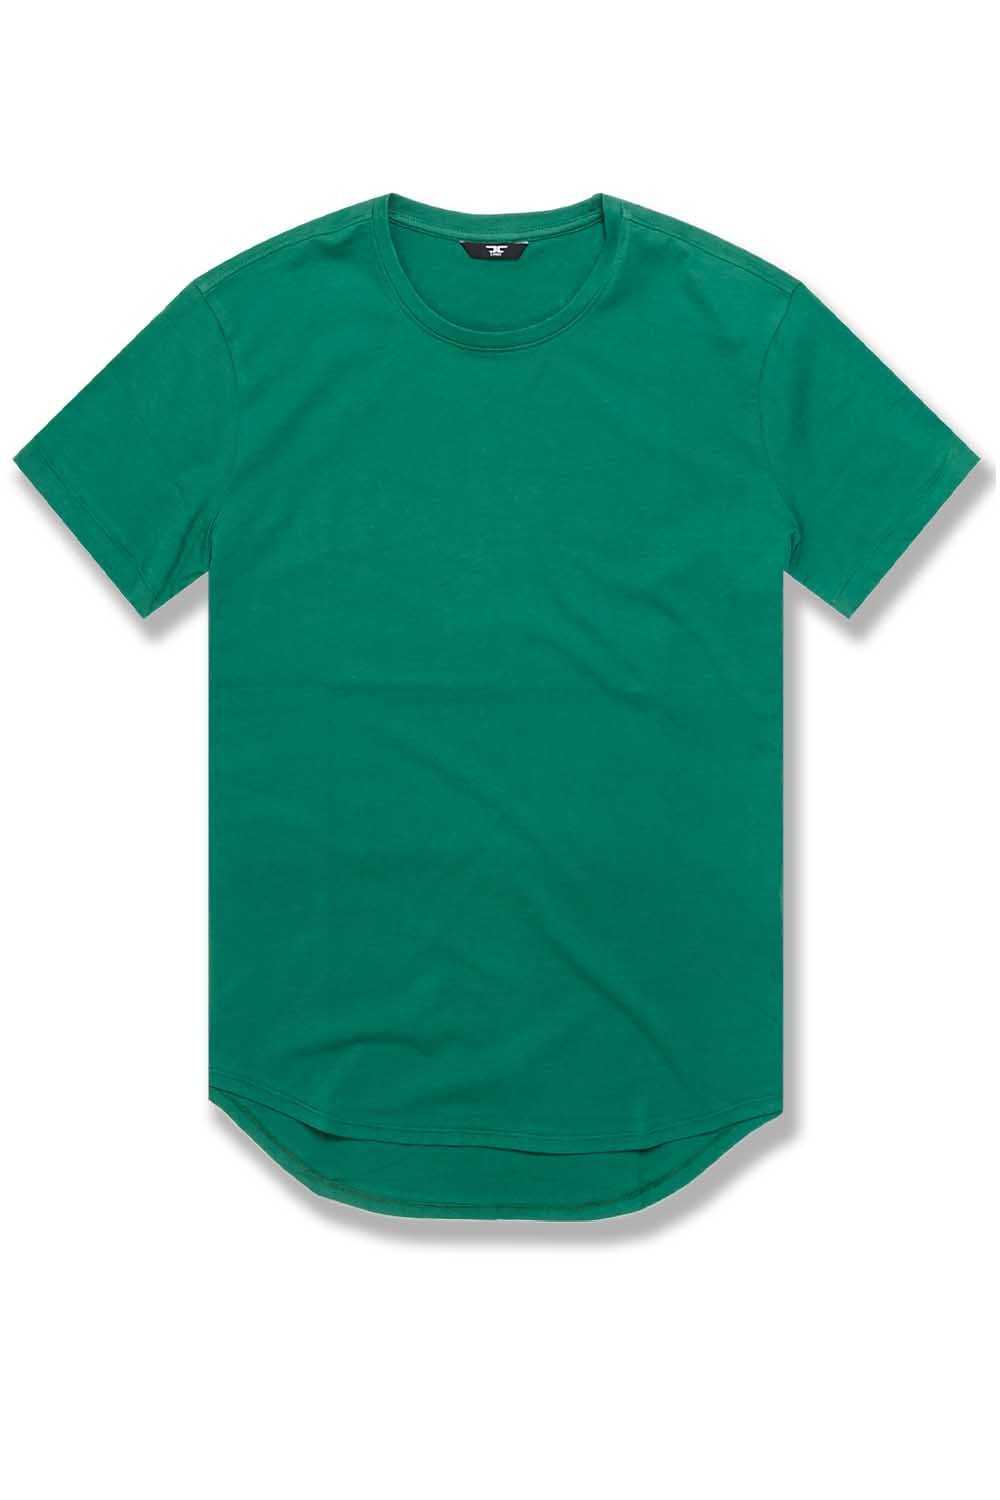 Jordan Craig Scallop T-Shirt (Athletic Fit) Ivy Green / S